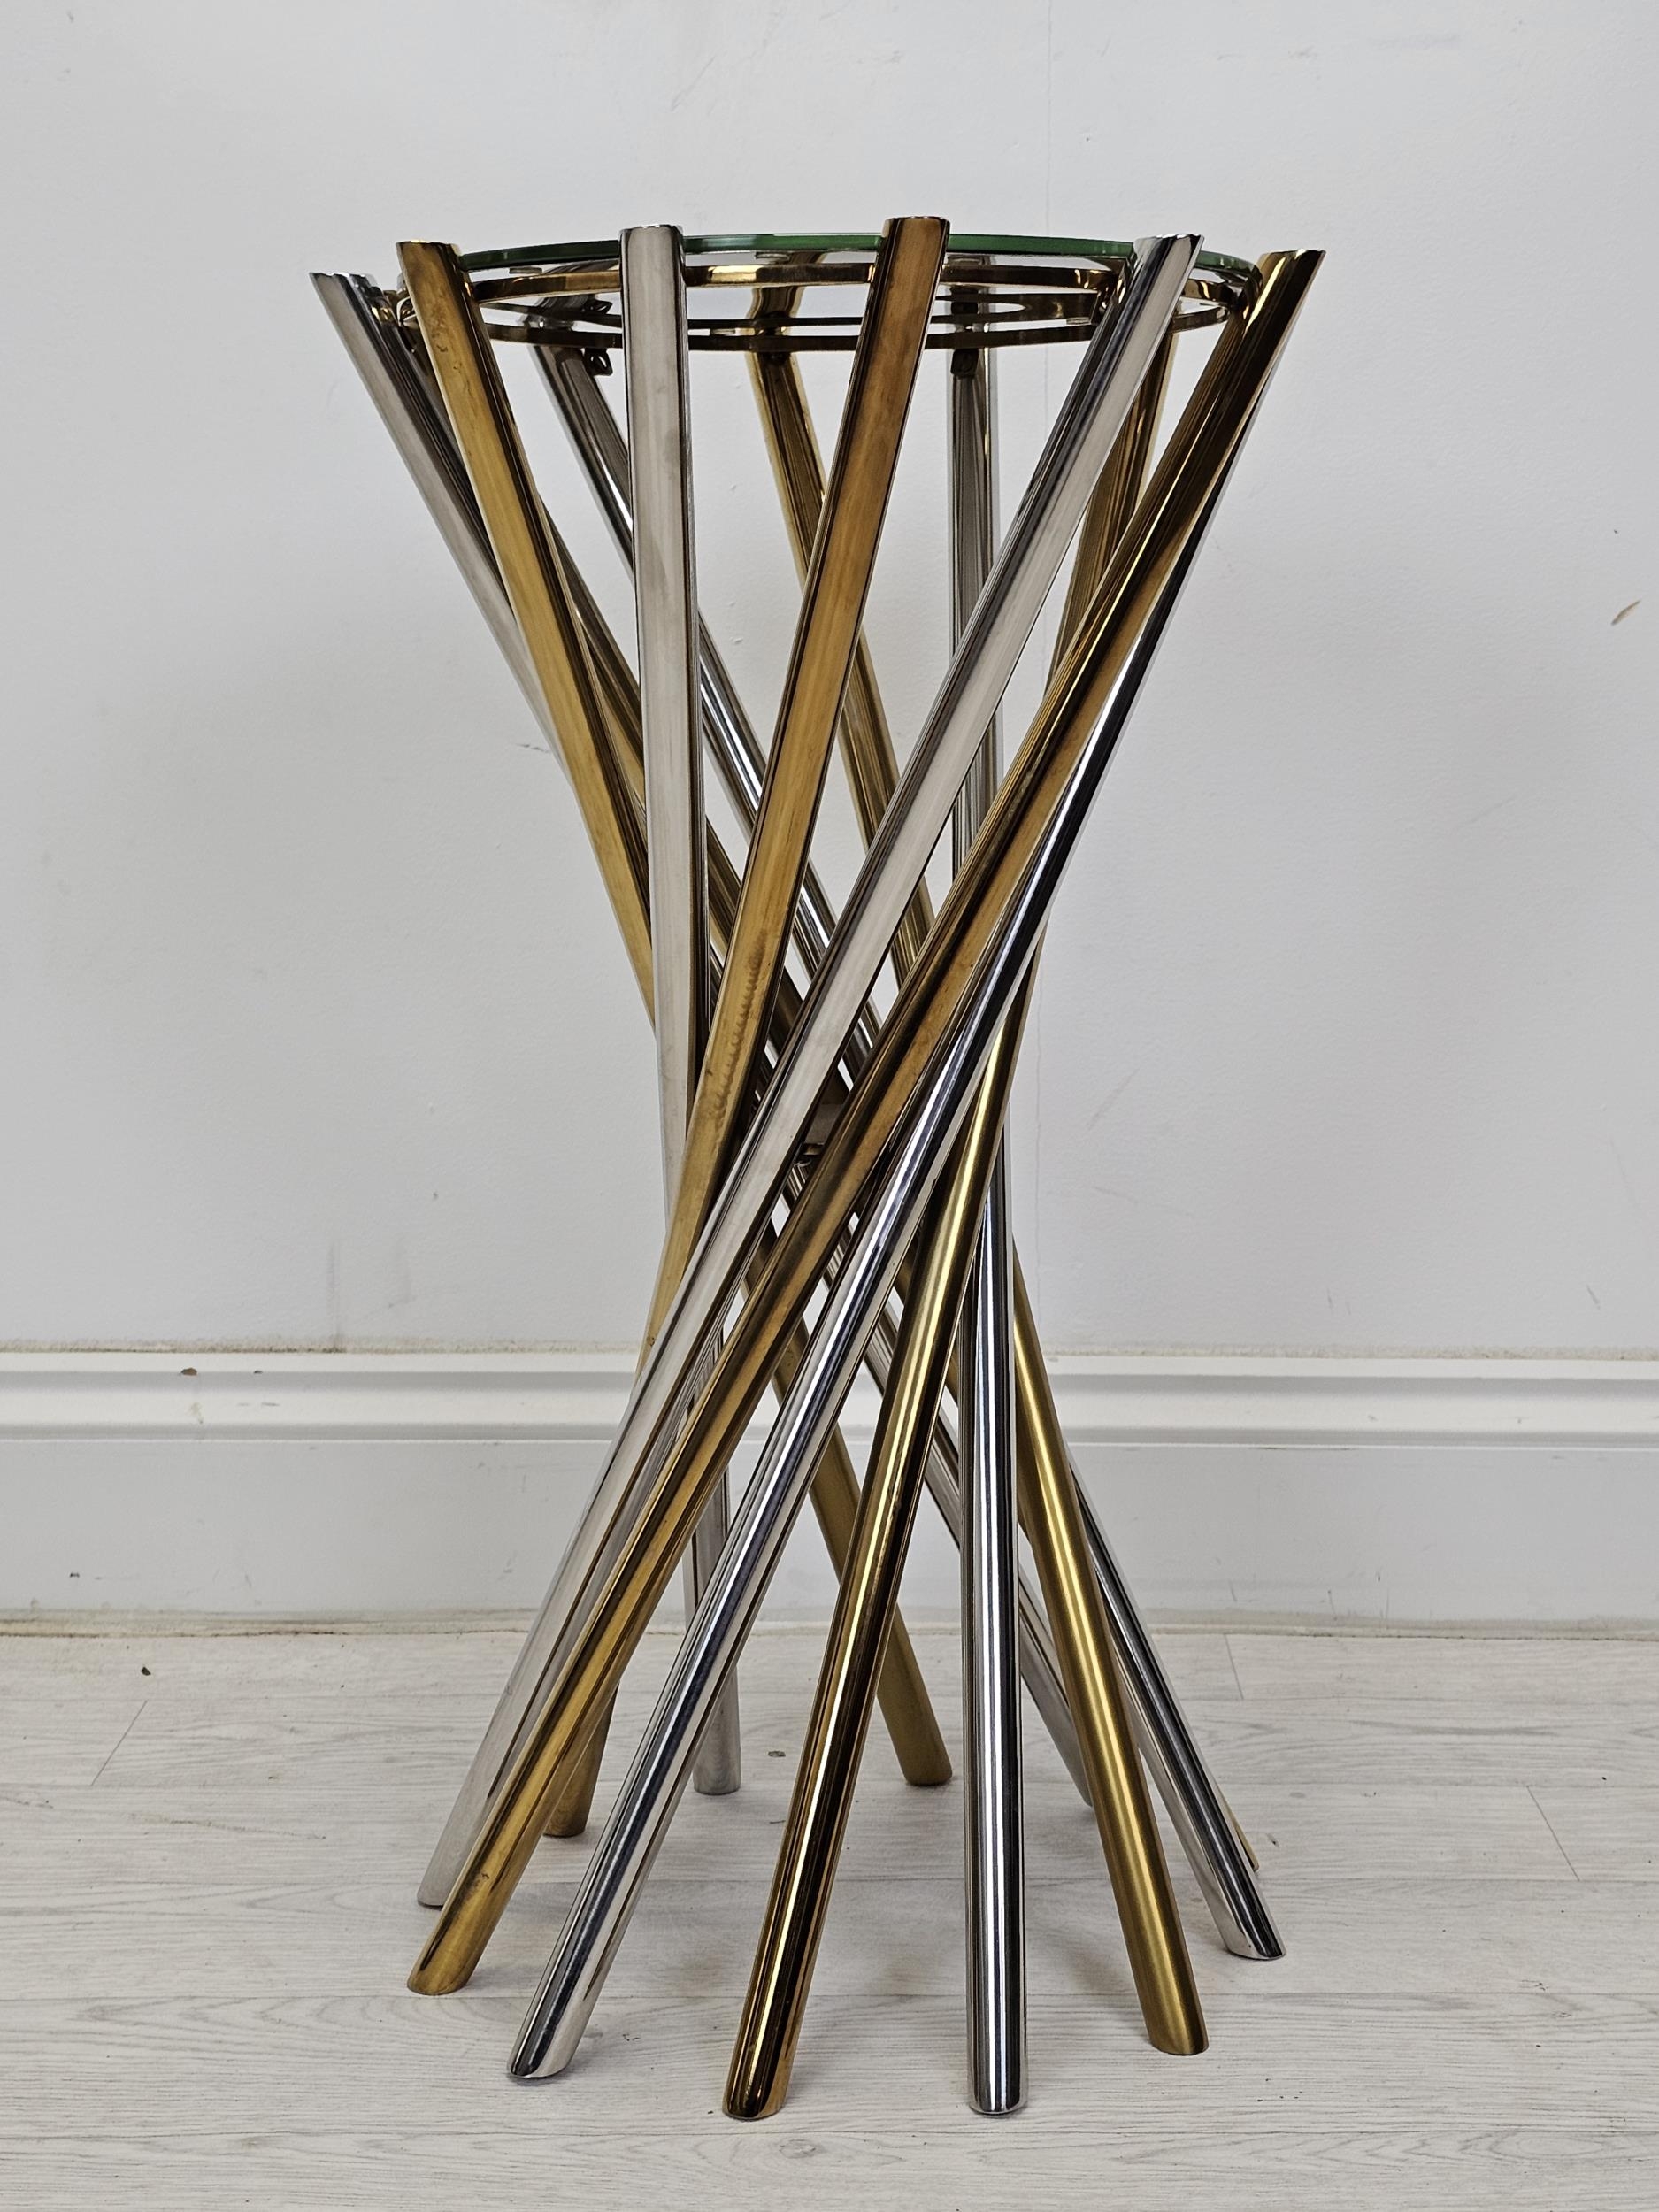 Jardinière or pedestal stand, contemporary chrome and gilt with a glass top. H.59 D.33cm.